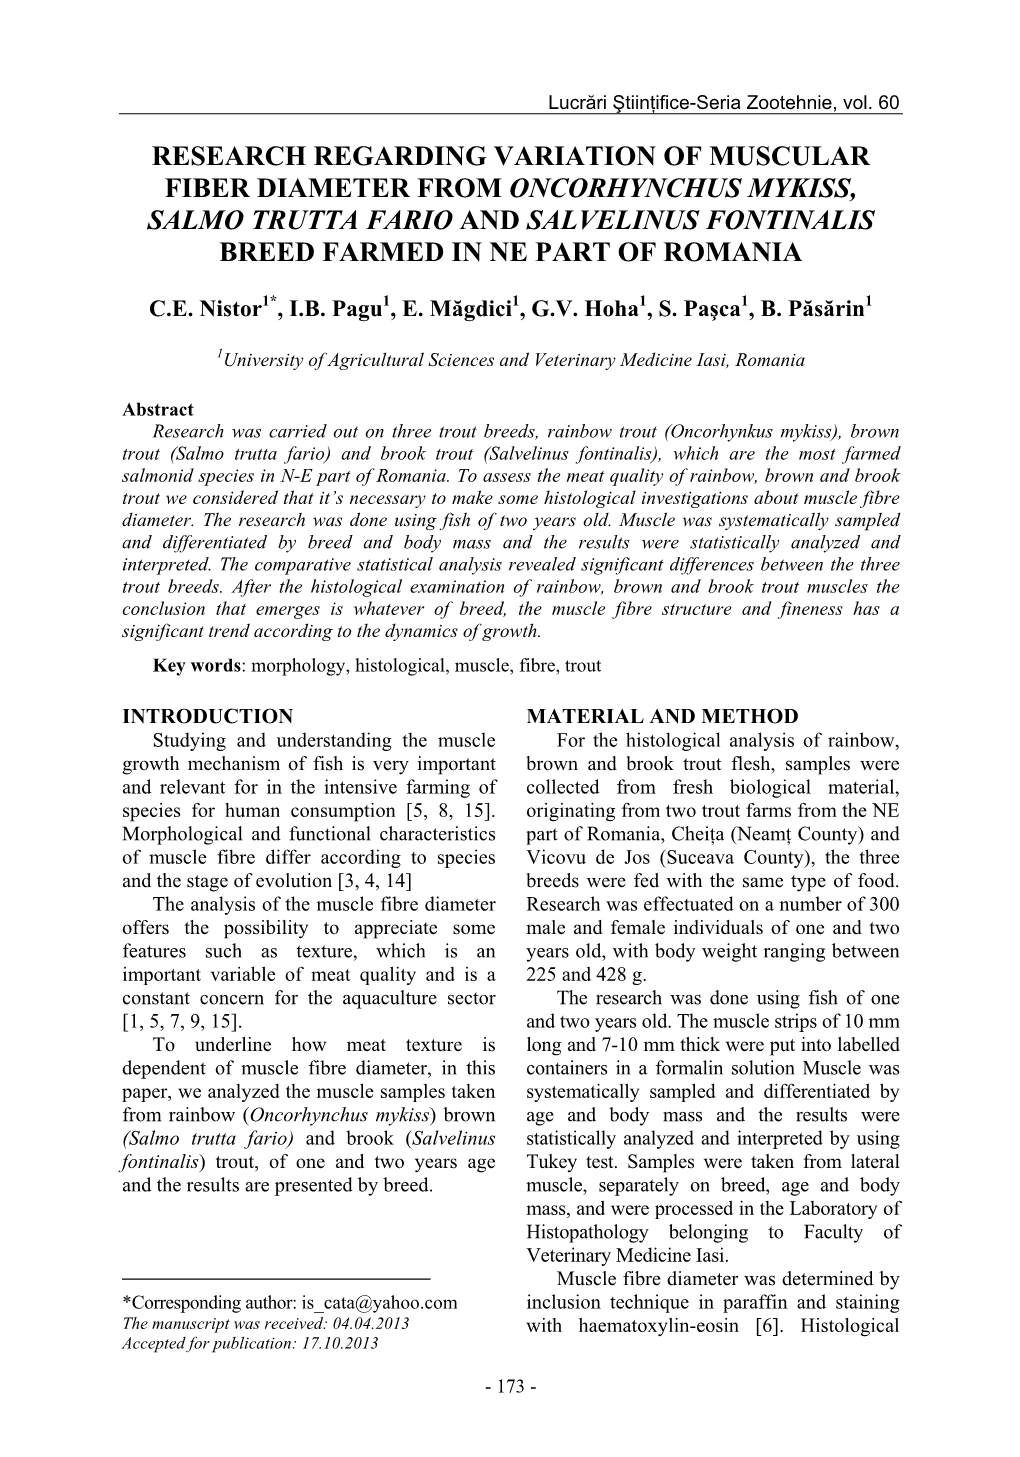 Research Regarding Variation of Muscular Fiber Diameter from Oncorhynchus Mykiss, Salmo Trutta Fario and Salvelinus Fontinalis Breed Farmed in Ne Part of Romania